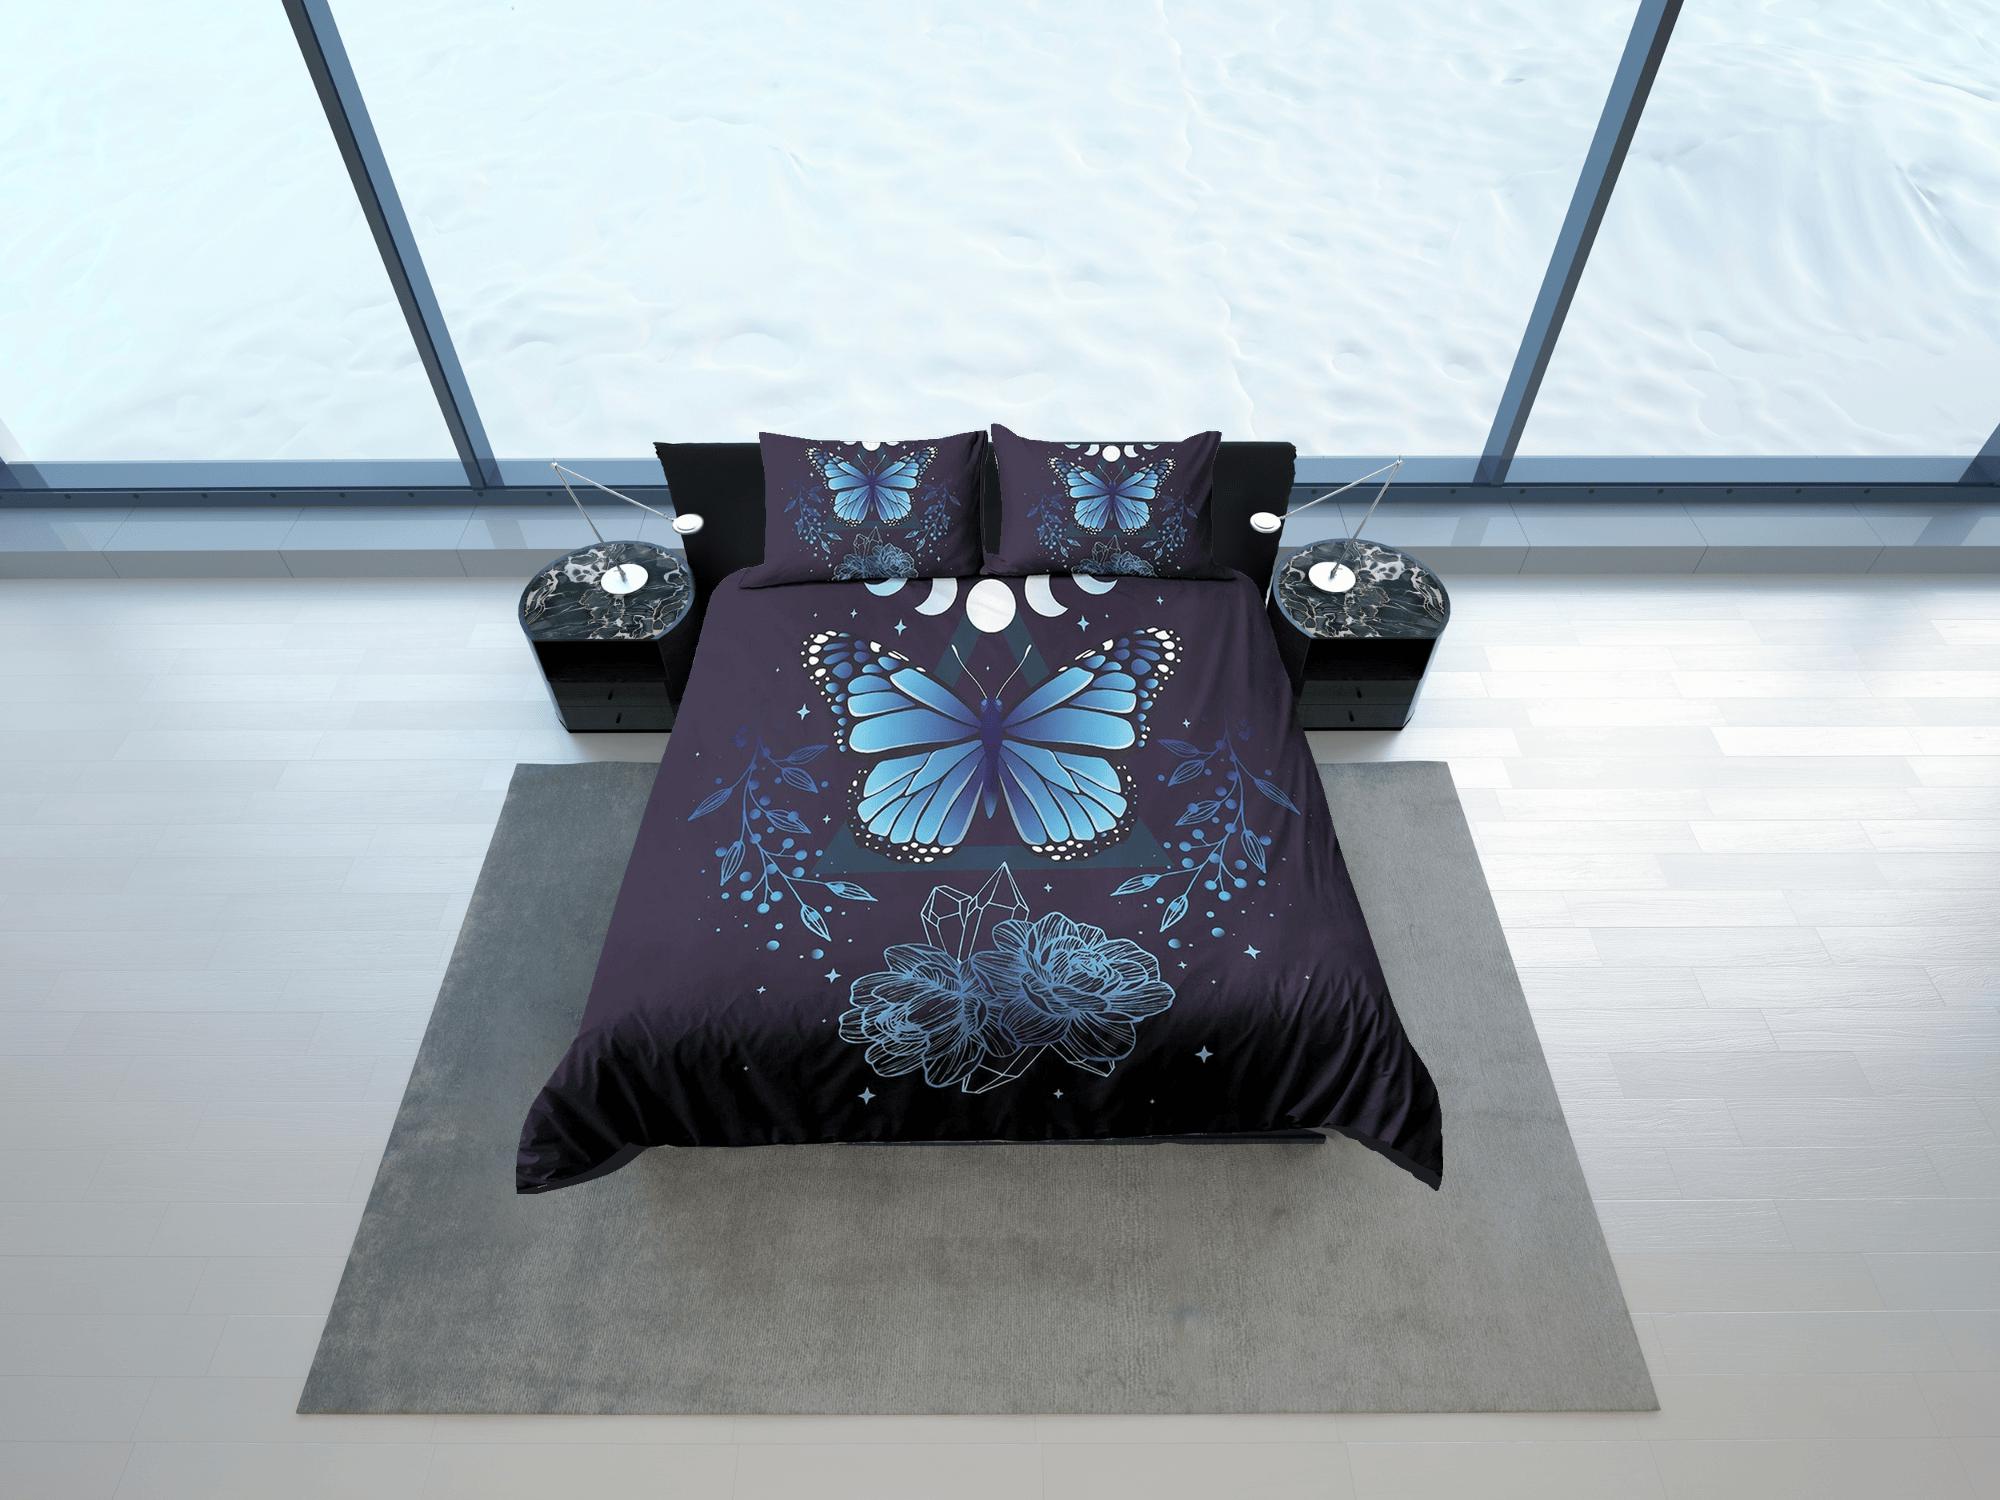 daintyduvet Blue monarch butterfly celestial bedding, witchy dorm bedding, aesthetic duvet cover set, boho bedding set full king queen, astrology gothic